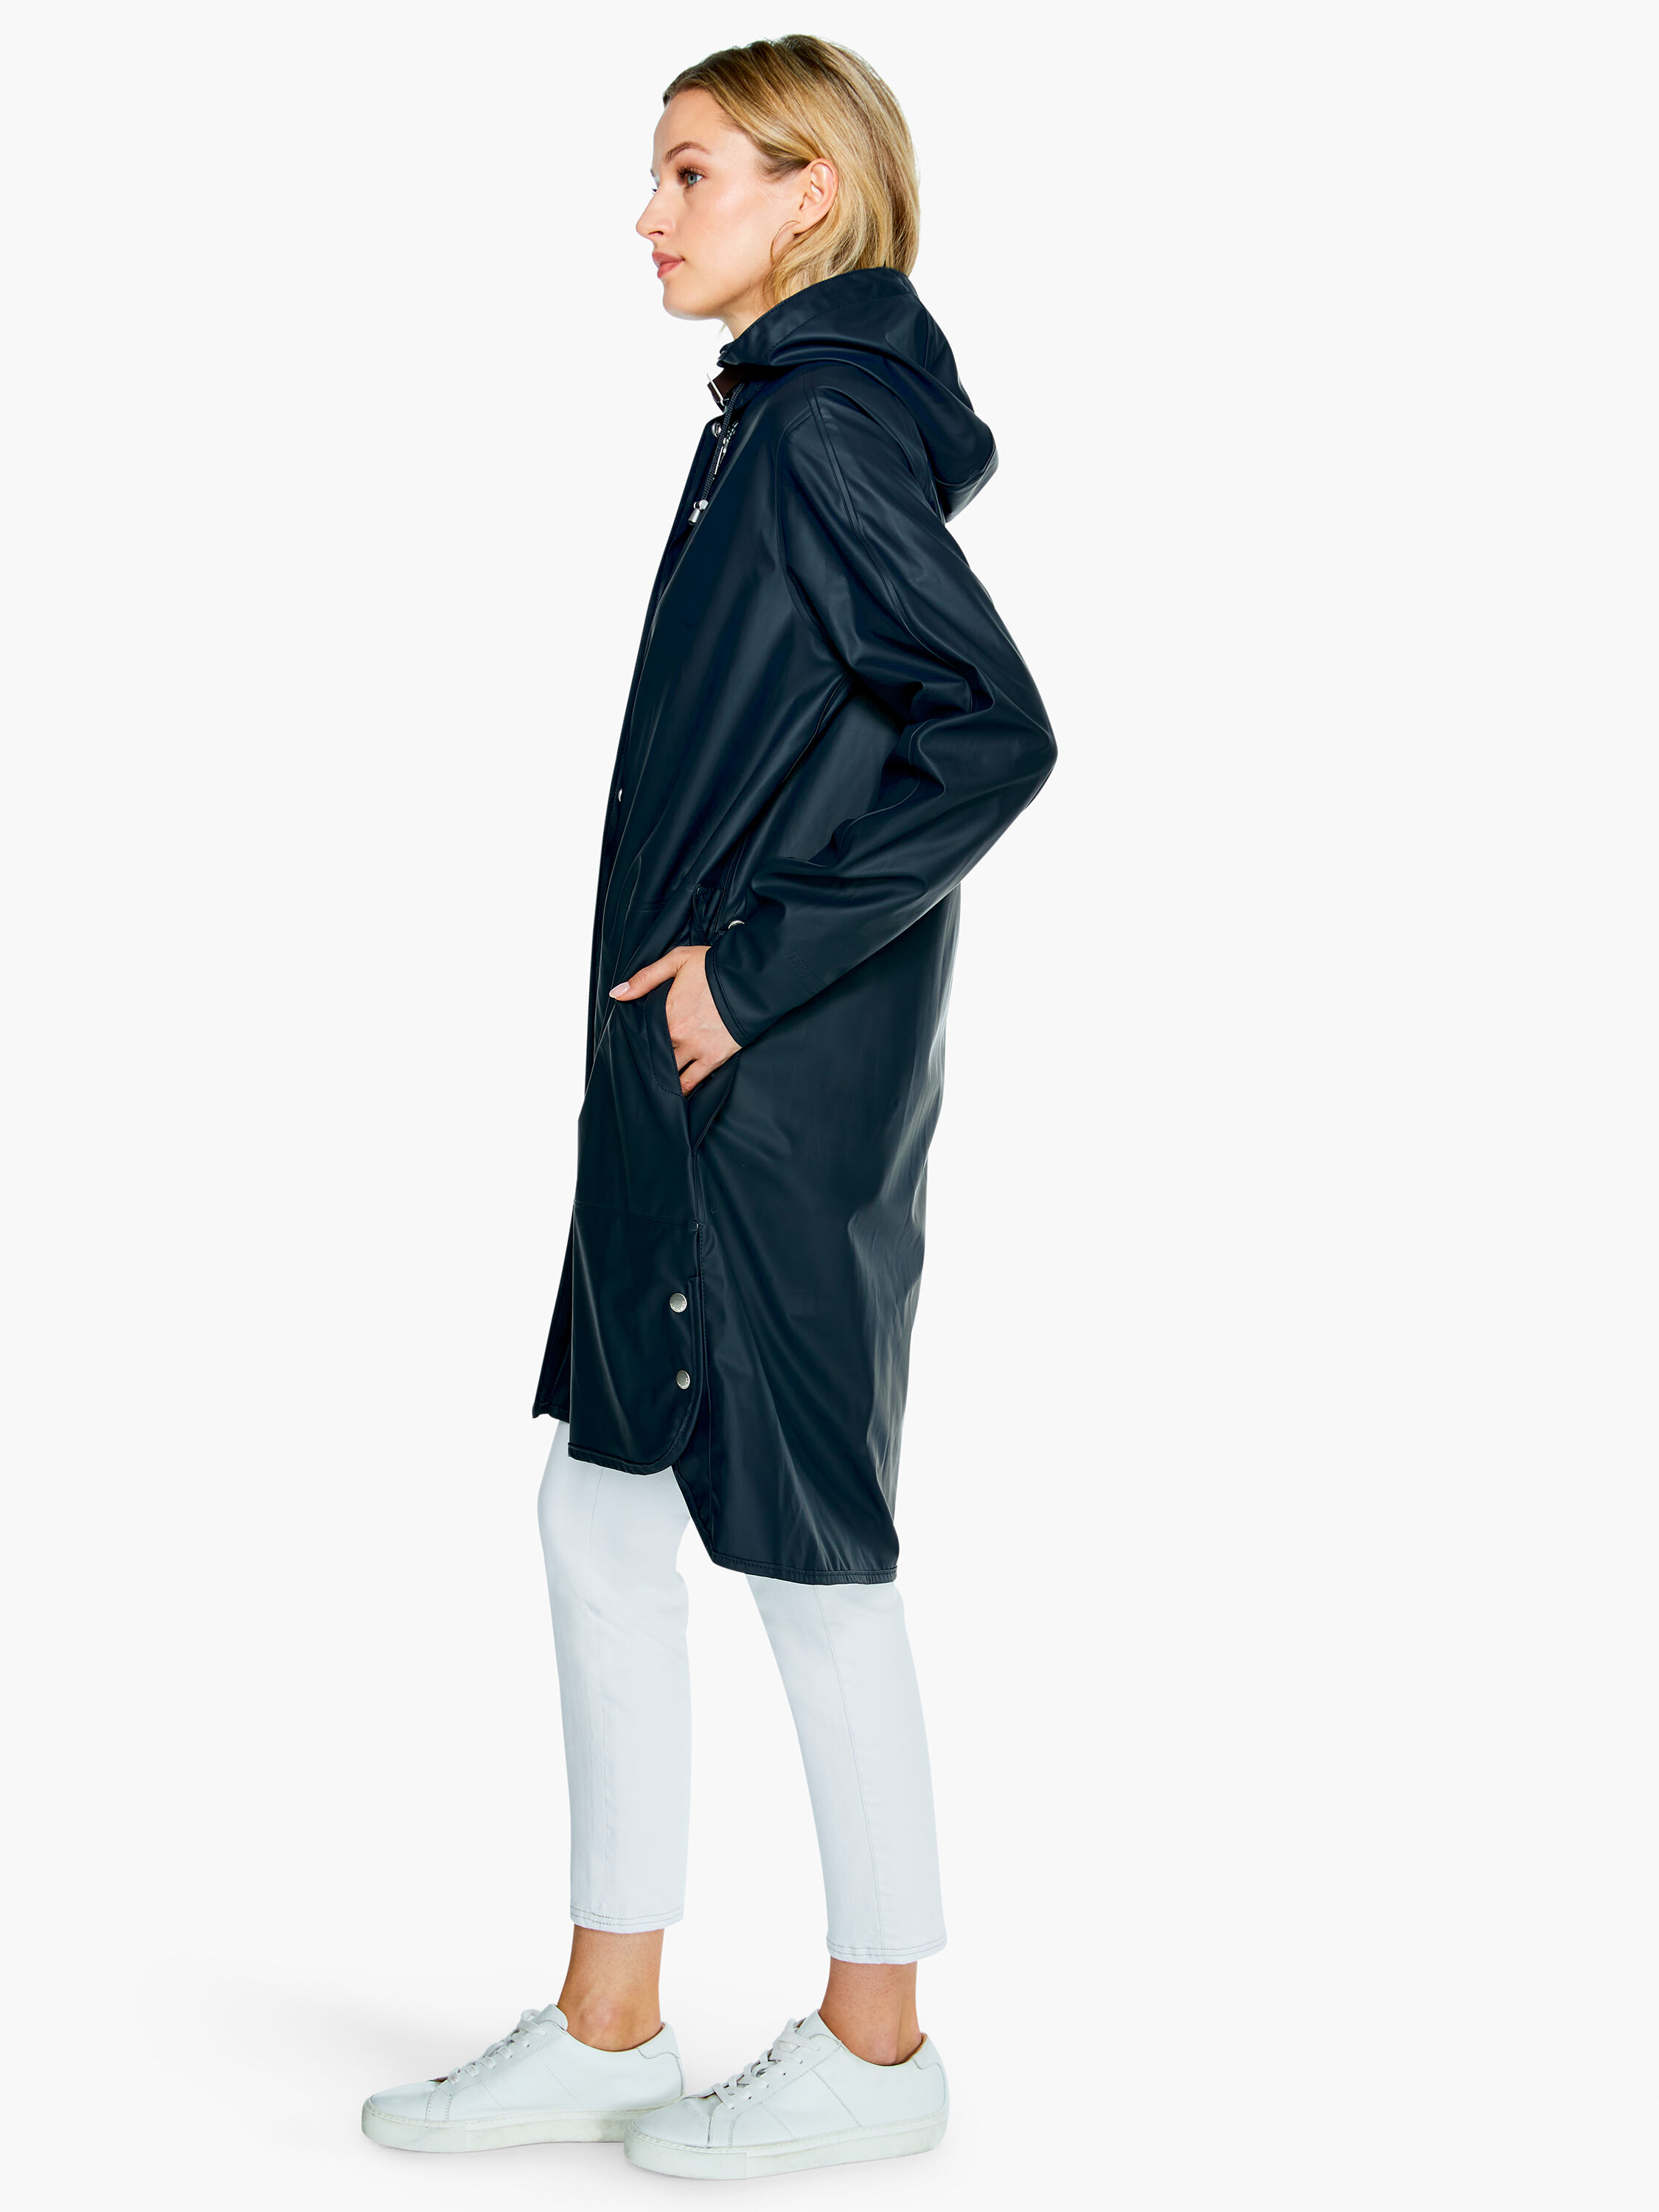 ILSE Jacobsen Womens RAIN71 Parka Long Sleeve Rain Jacket